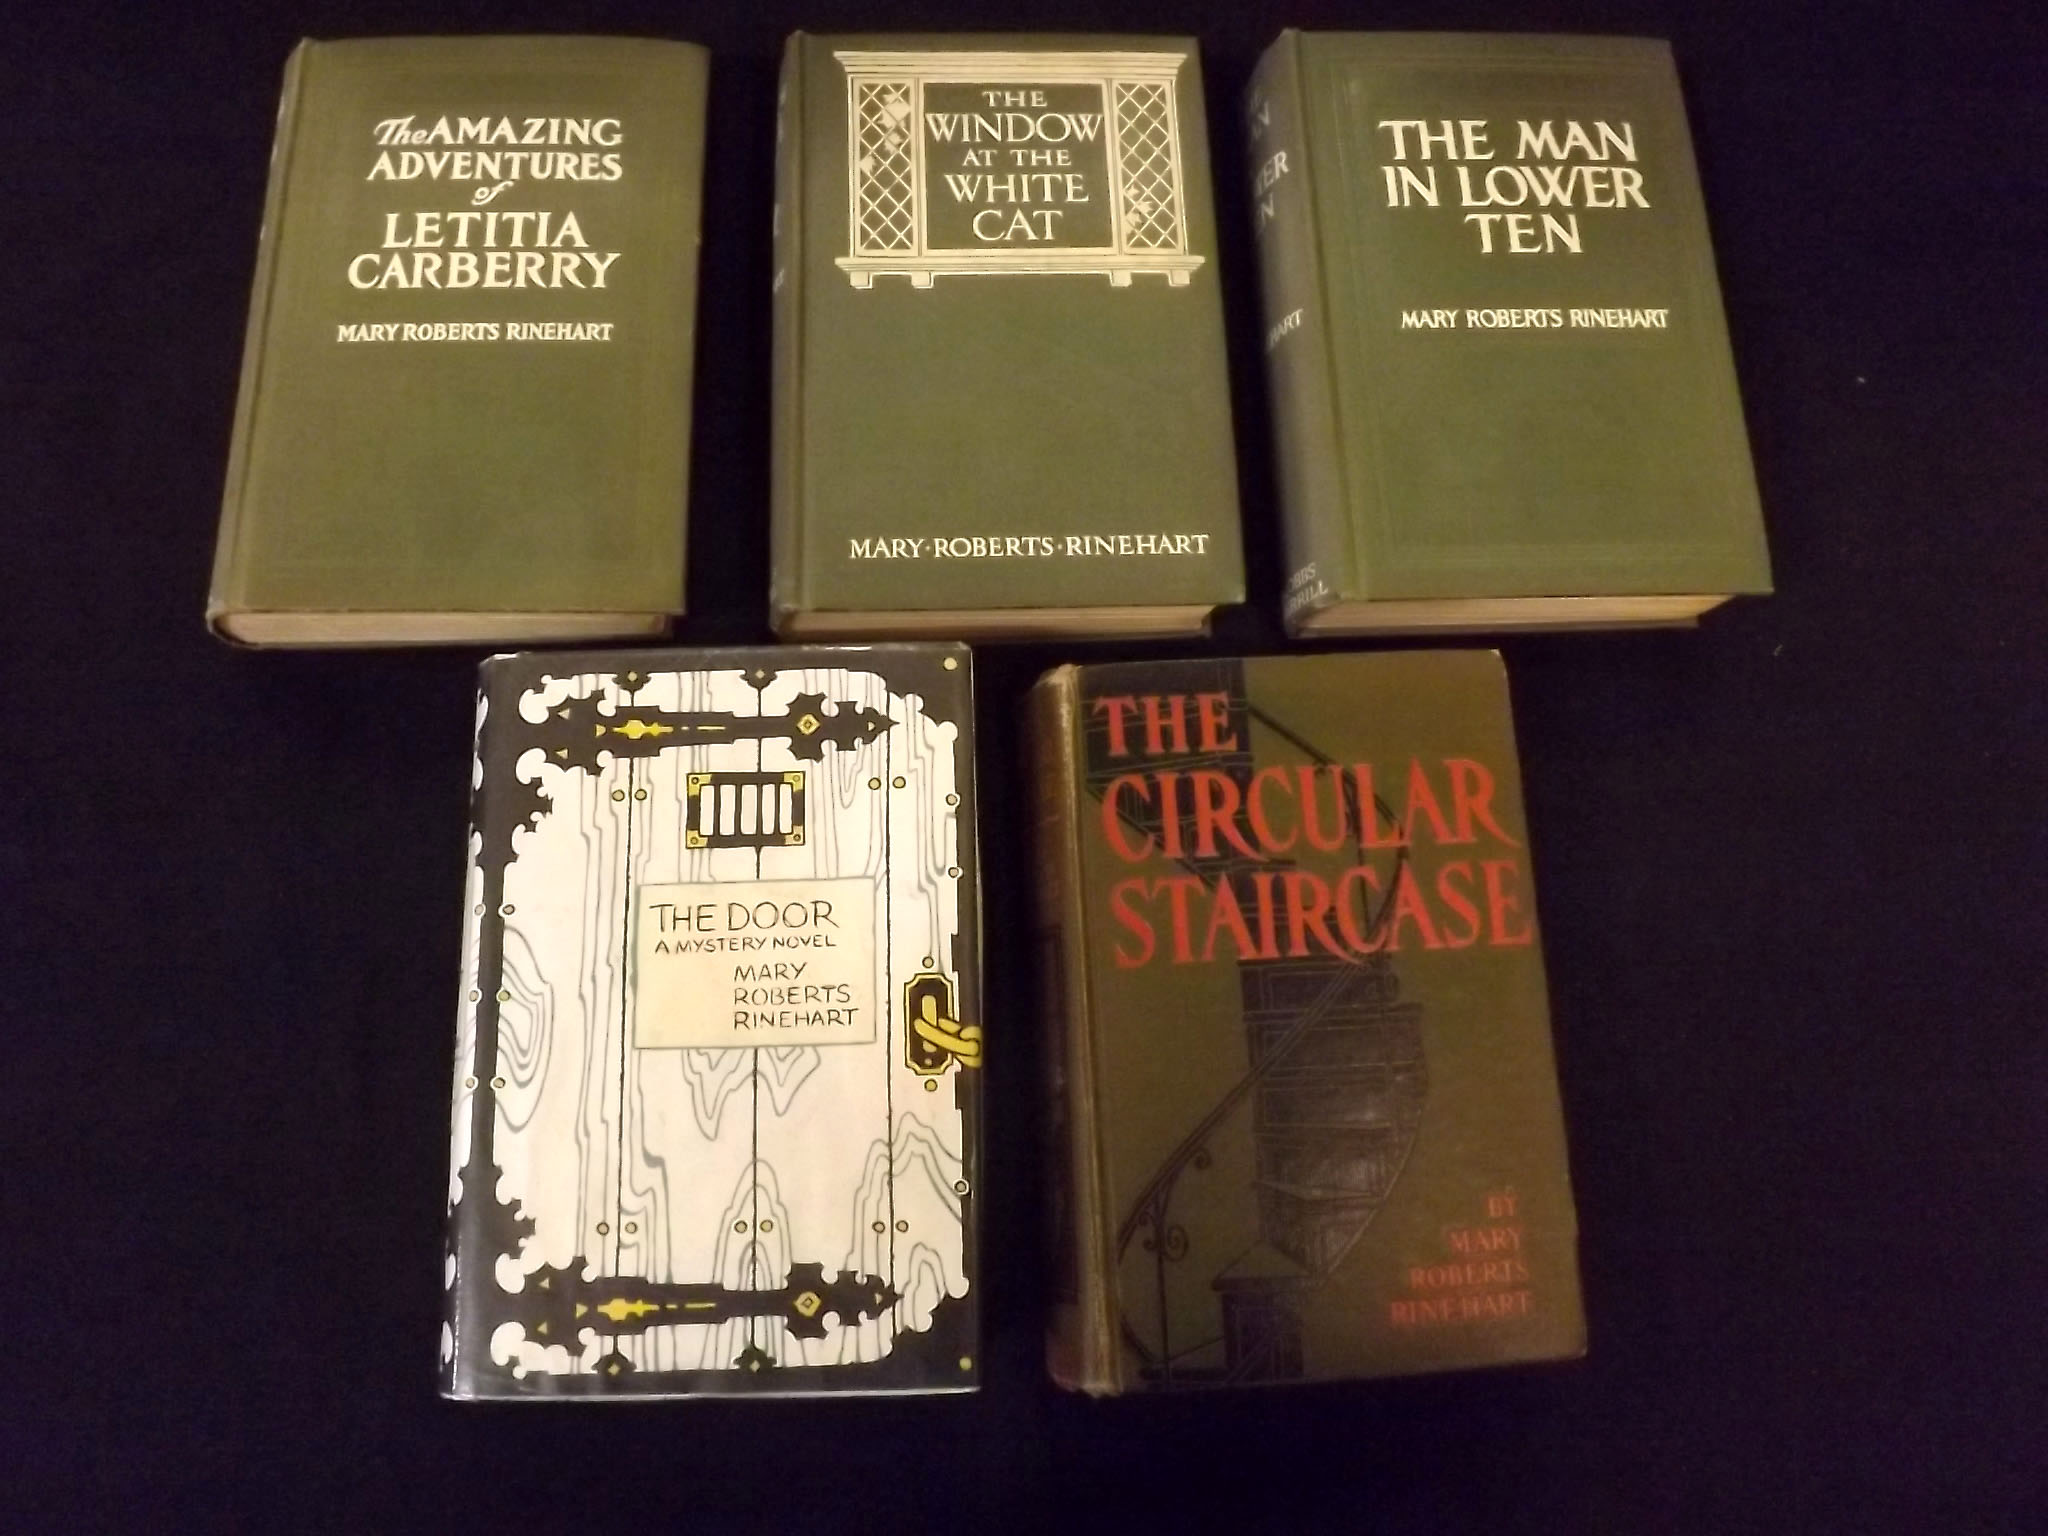 MARY ROBERTS RINEHART: 5 titles: THE CIRCULAR STAIRCASE, Indianapolis, Bobbs-Merrill, 1908, 1st